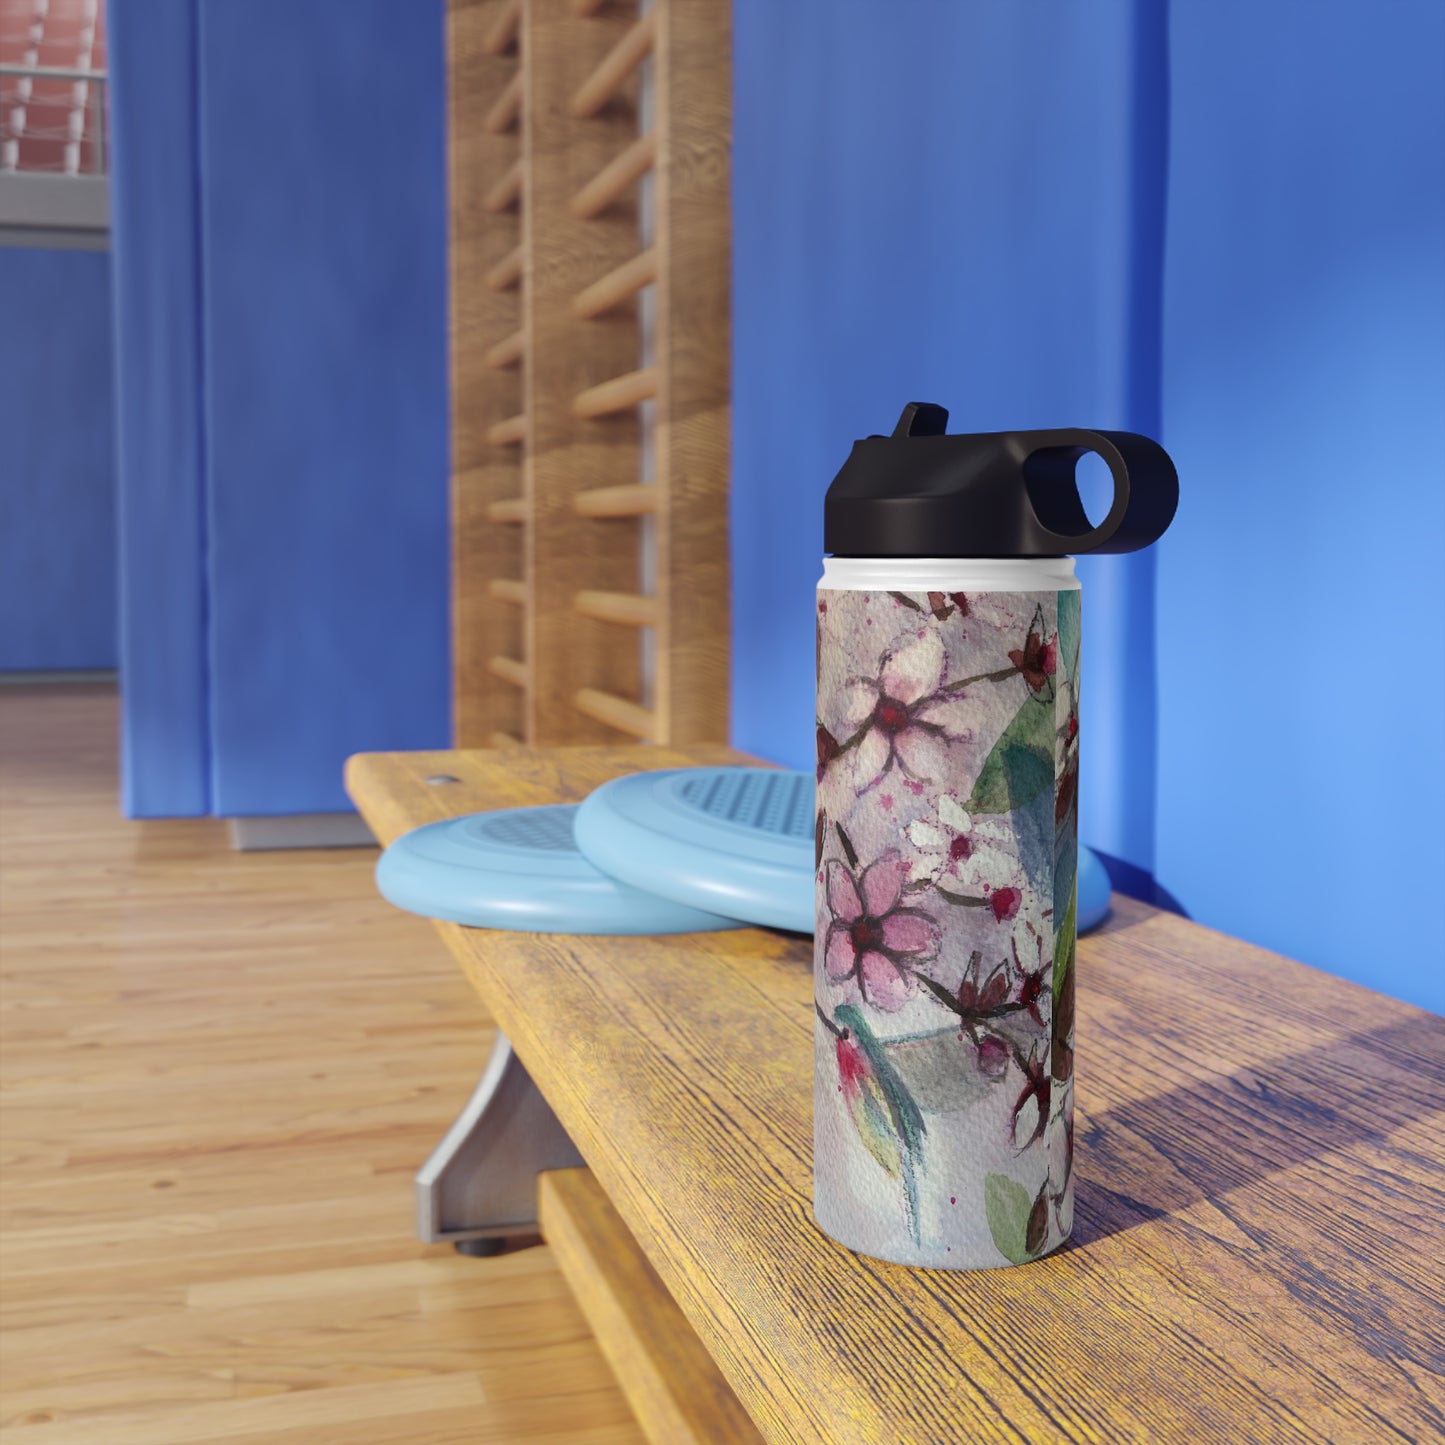 Botella de agua de acero inoxidable con diseño de colibrí en flores de cerezo, tapa estándar